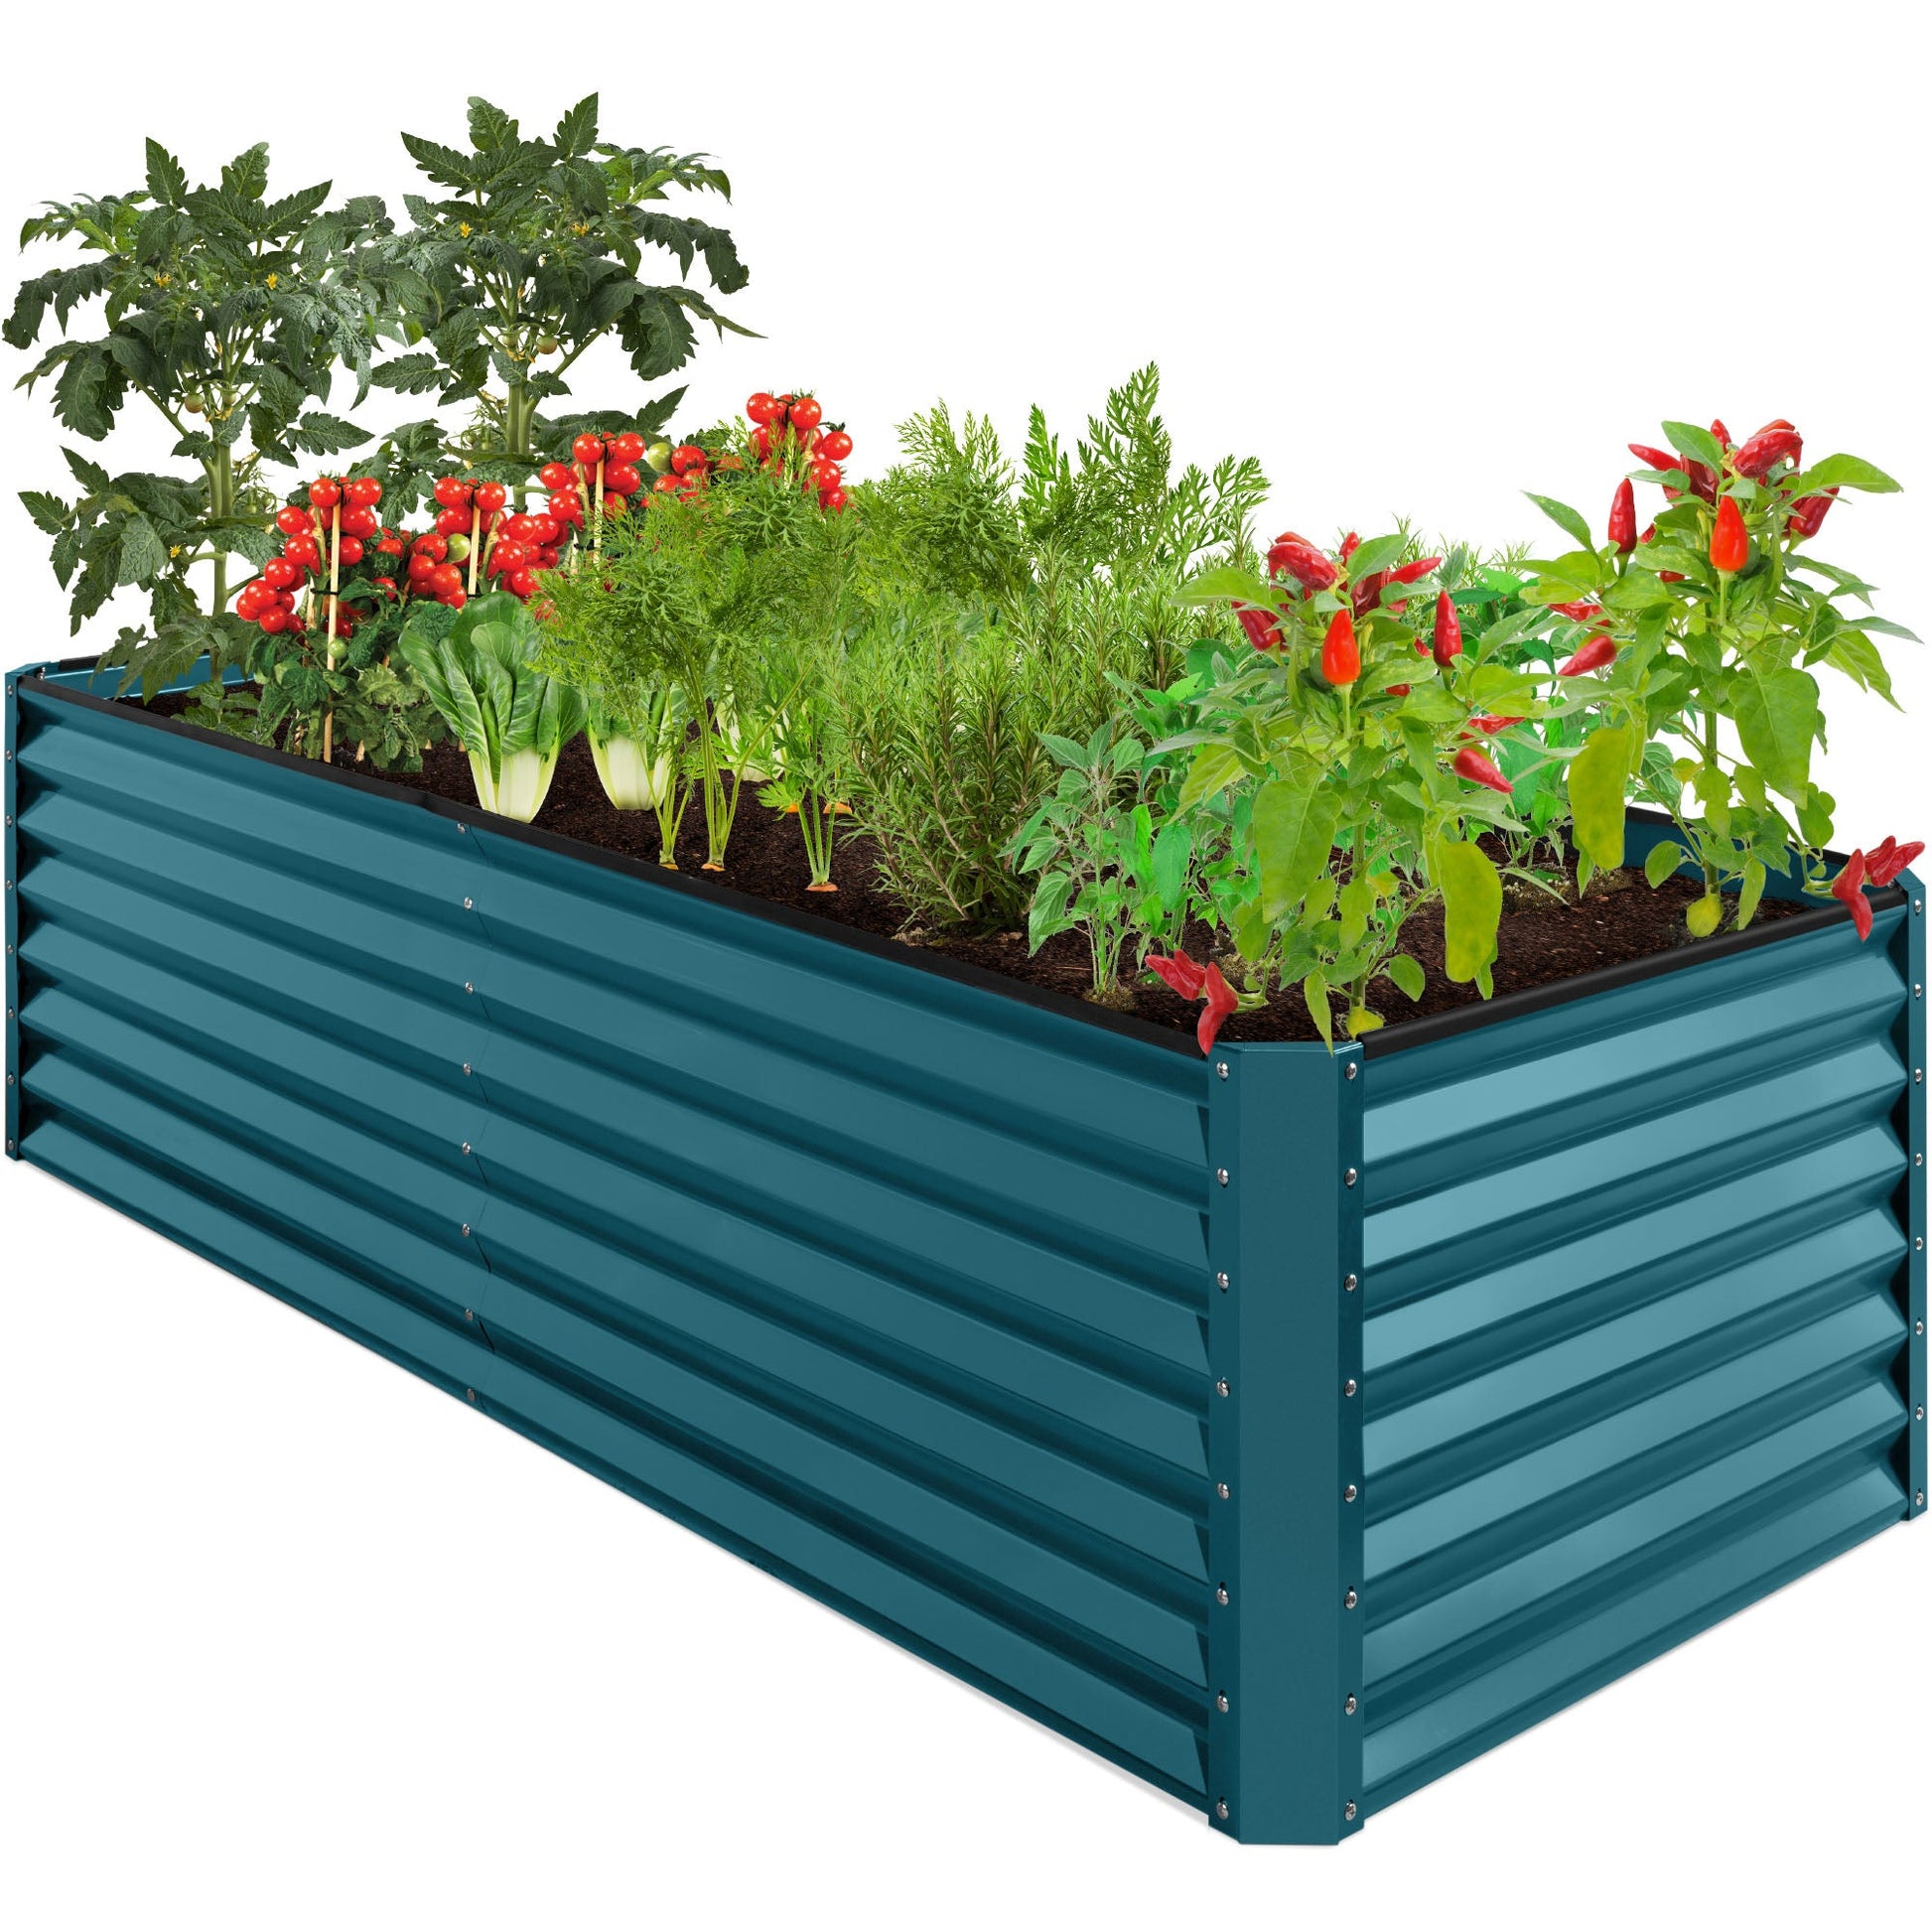 Outdoor Metal Raised Garden Bed for Vegetables, Flowers, Herbs - 8x4x2ft